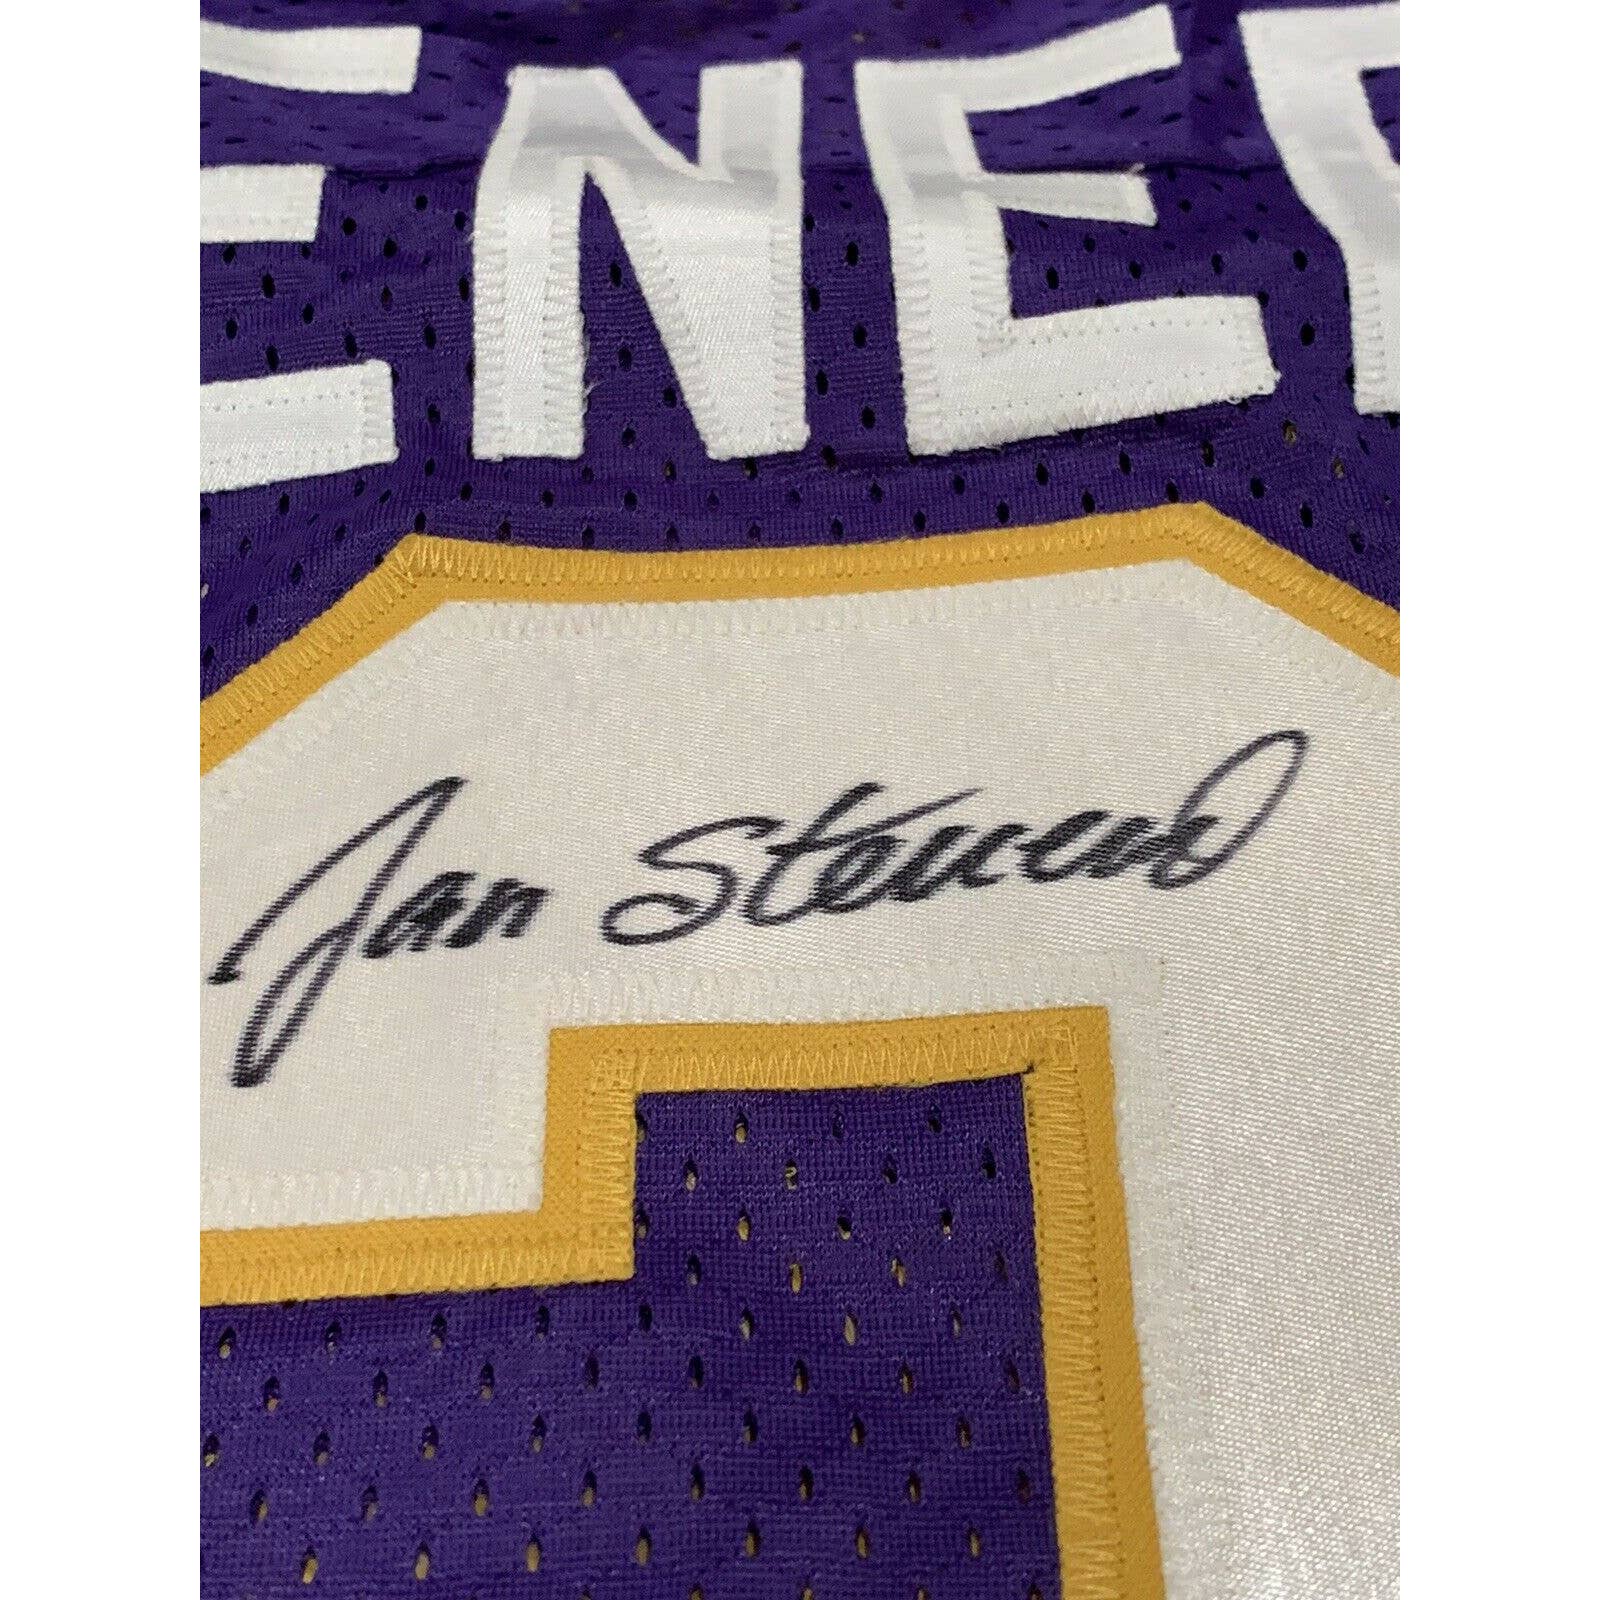 Jan Stenerud Autographed/Signed YouthJersey Minnesota Vikings HOF Youth Size - TreasuresEvolved